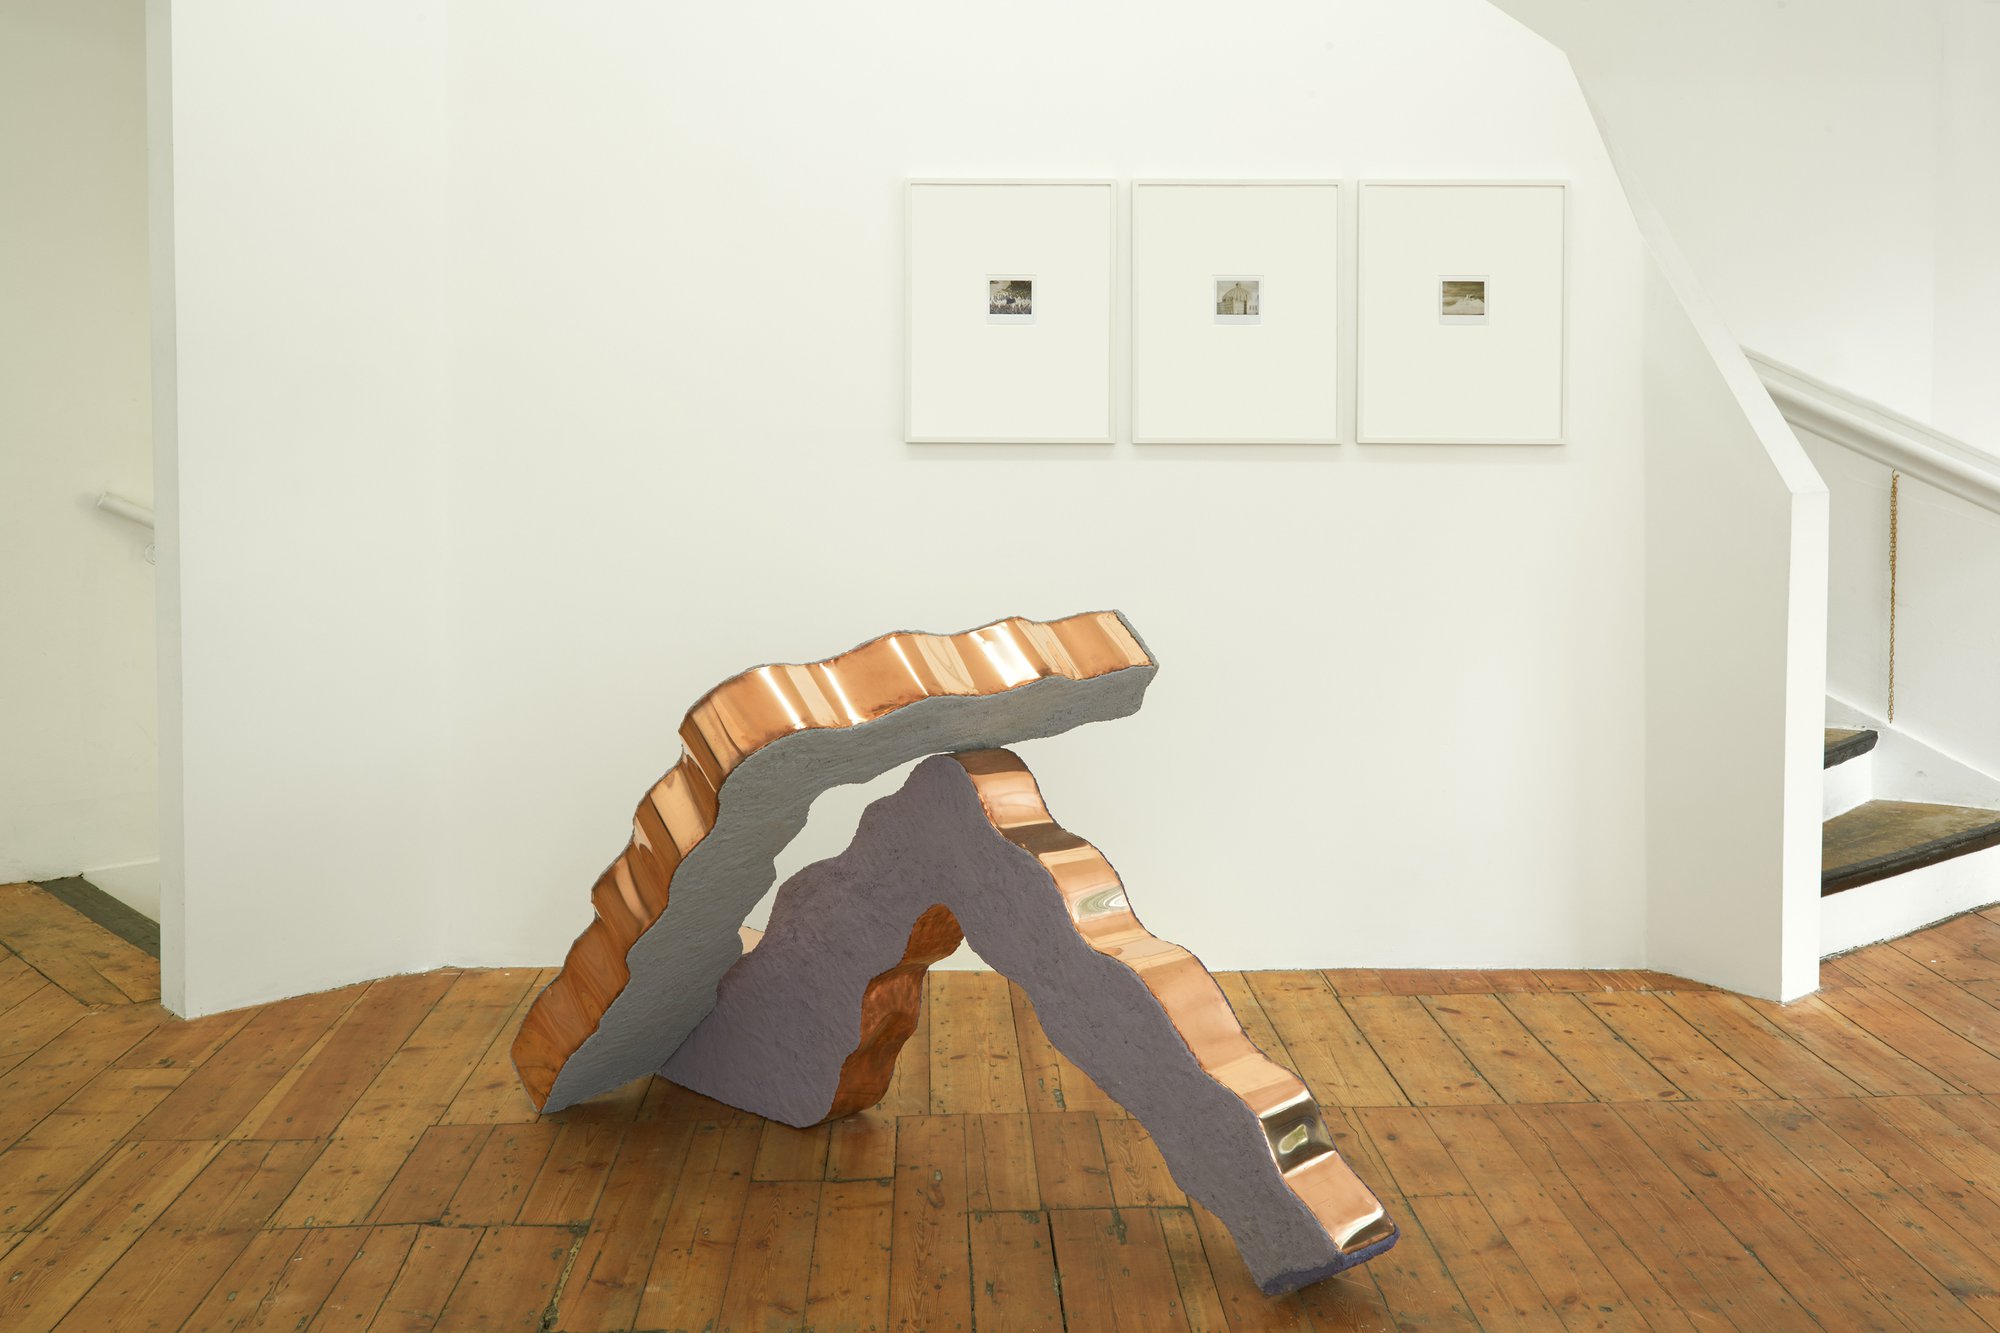 Tamara Henderson, Treaty of Slippage: Wake of Limbs, copper, paint, sand, glue, wood, 90 x 157.5 x 94.5 cm (35 3/8 x 62 x 37 1/4 in), 2014(On wall) Haris Epaminonda, Untitled #08, Untitled #311, Untitled #371, polaroids, 10.3 x 10.2 cm each (4 x 4 in each); 58 x 46 cm framed (22 7/8 x 18 1/8 in framed), 2008 – 2009